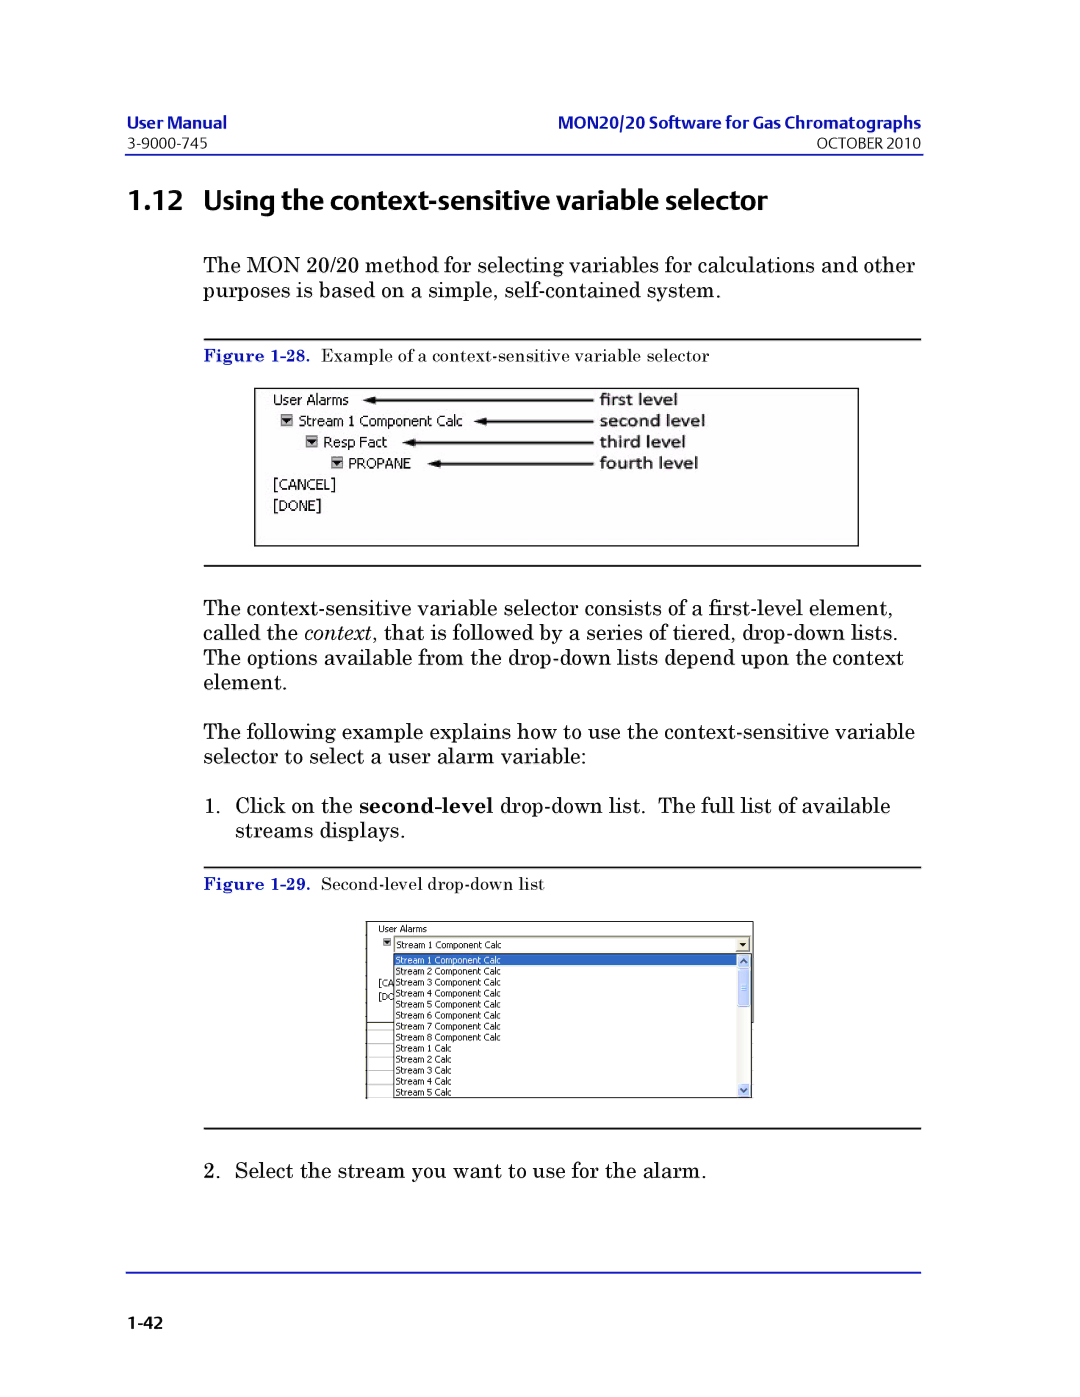 Emerson Process Management 3-9000-745 manual Using the context-sensitive variable selector 